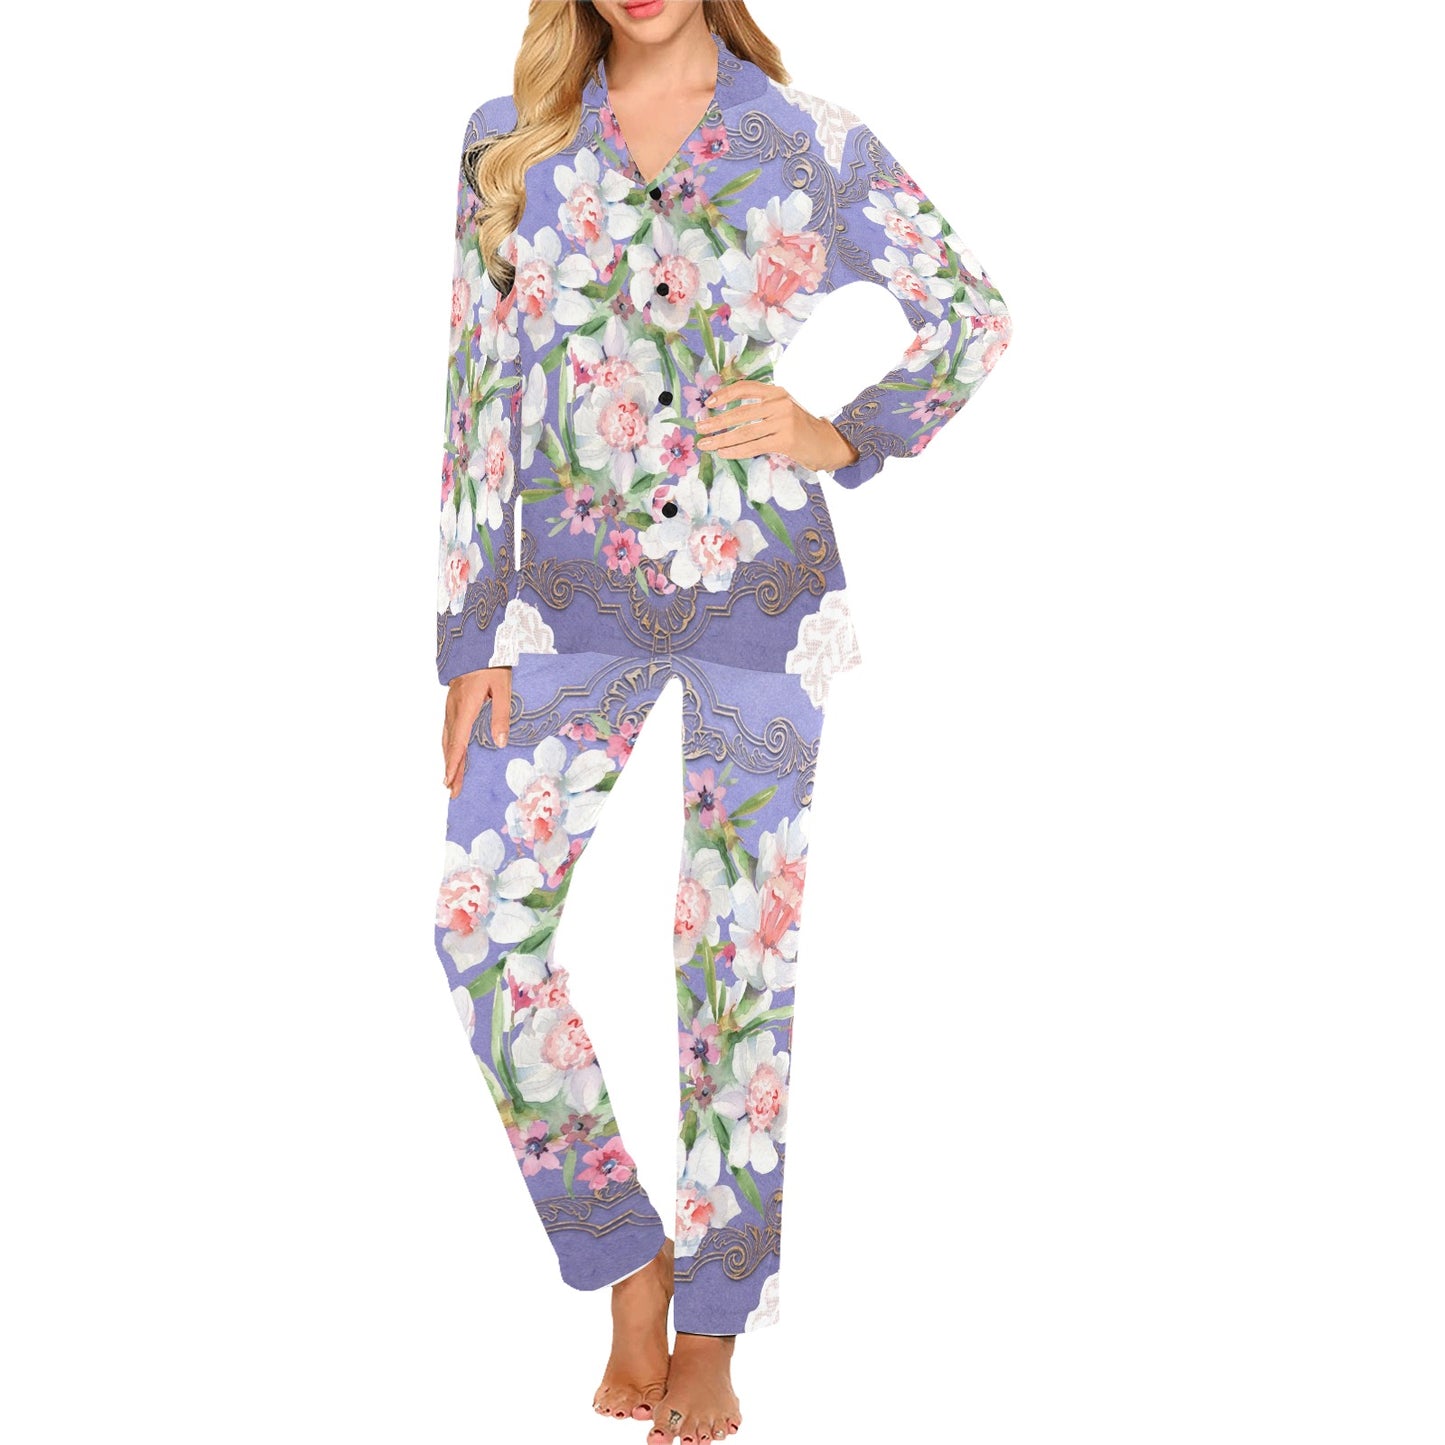 Victorian printed lace pajama set, design 47 Women's Long Pajama Set (Sets 02)